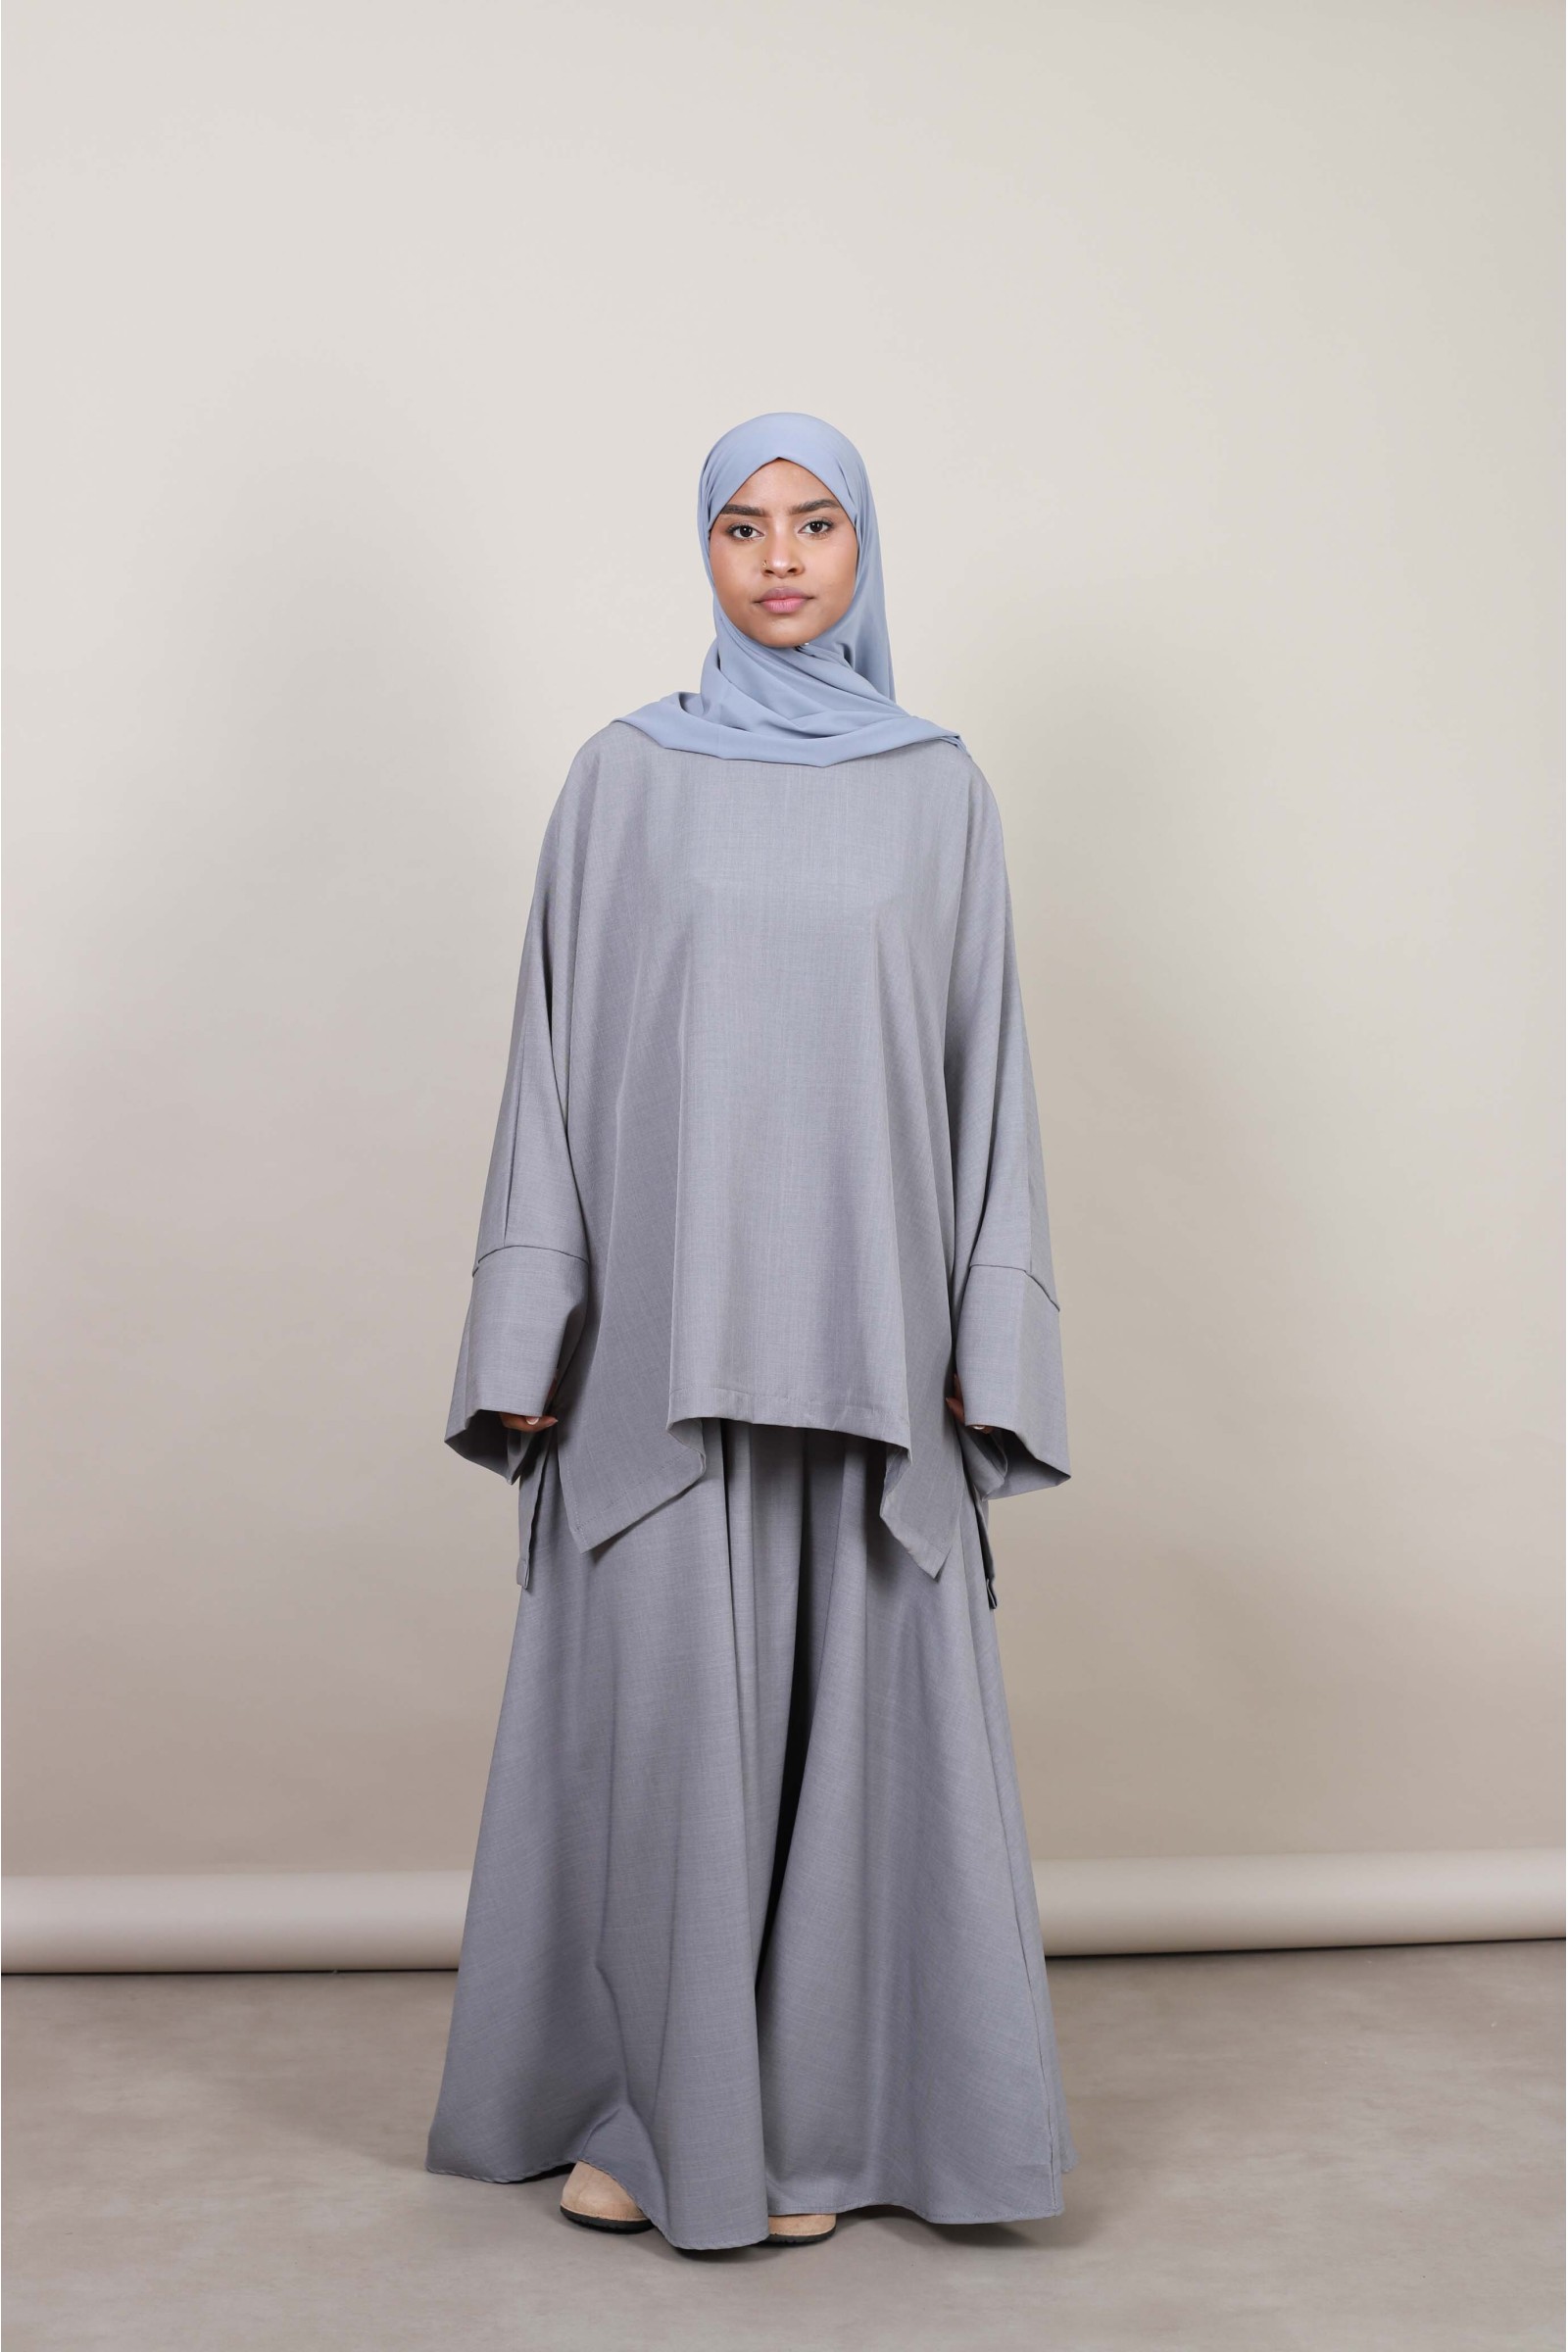 Modest fashion hijab set for Muslim woman